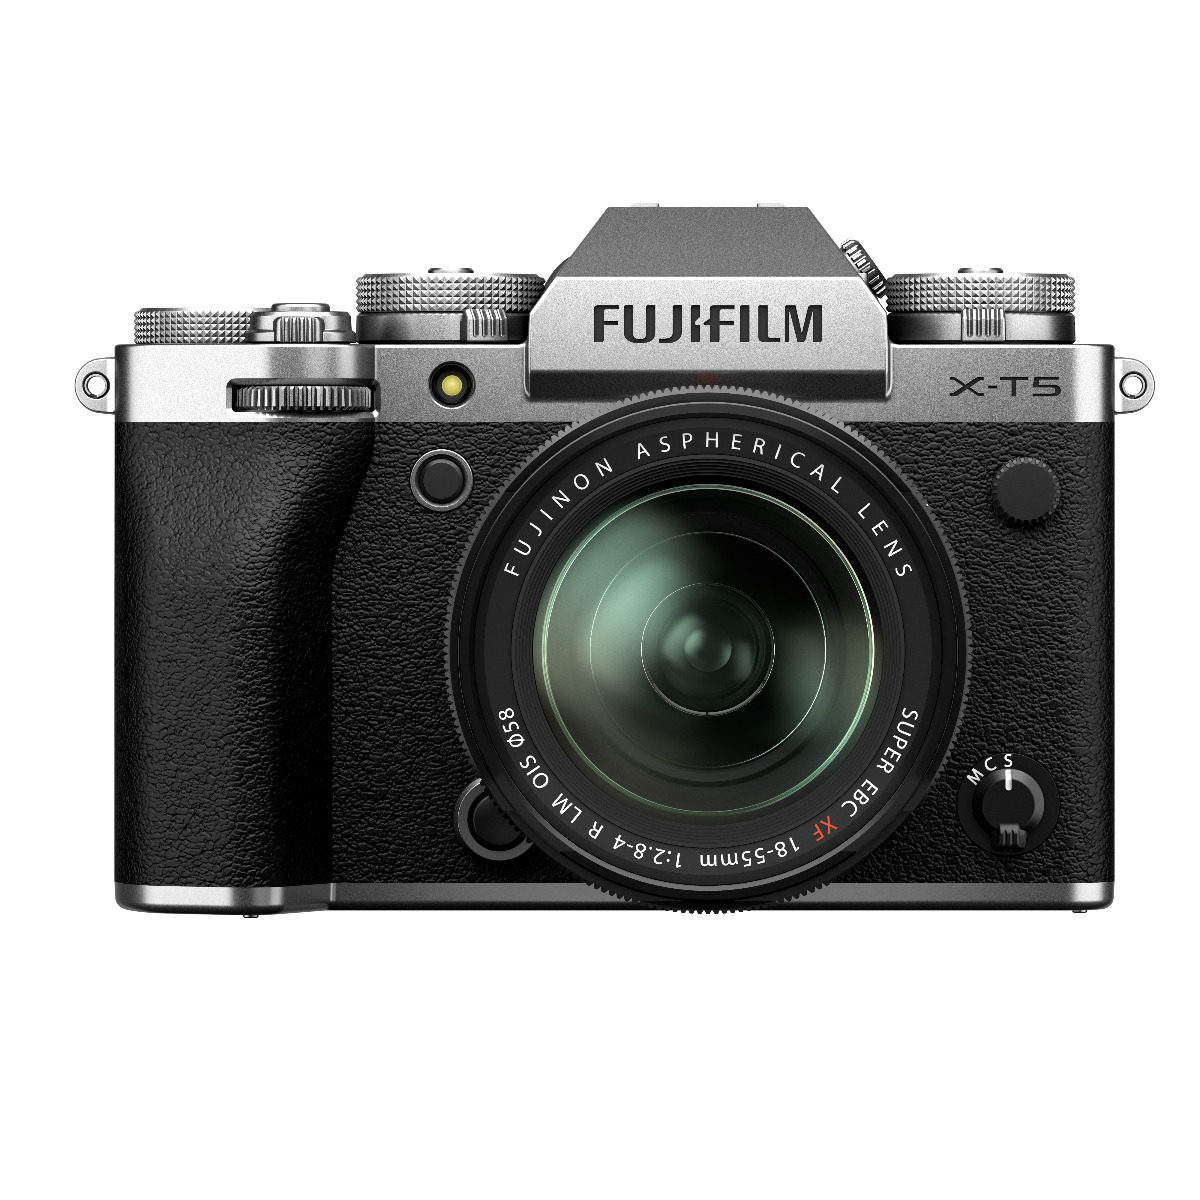 Fujifilm X-T5 with XF 18-55mm F2.8-4 R LM OIS Lens - Silver